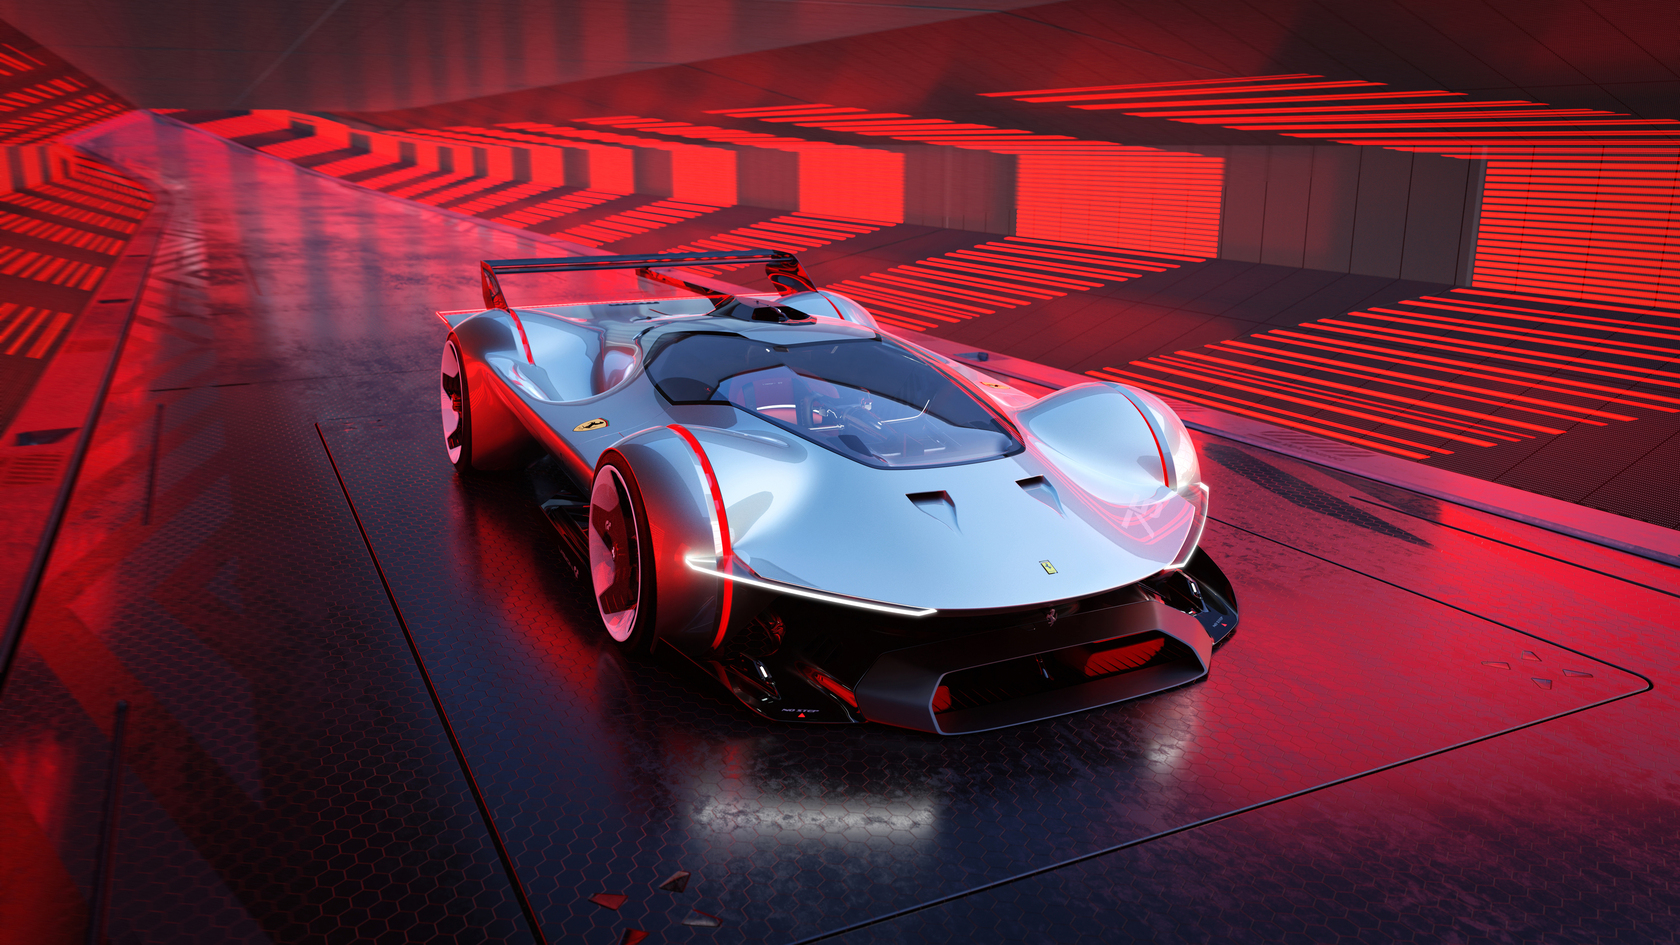 Ferrari 賽車概念作品 Vision Gran Turismo 融合了古典與現代，風格相當特別。